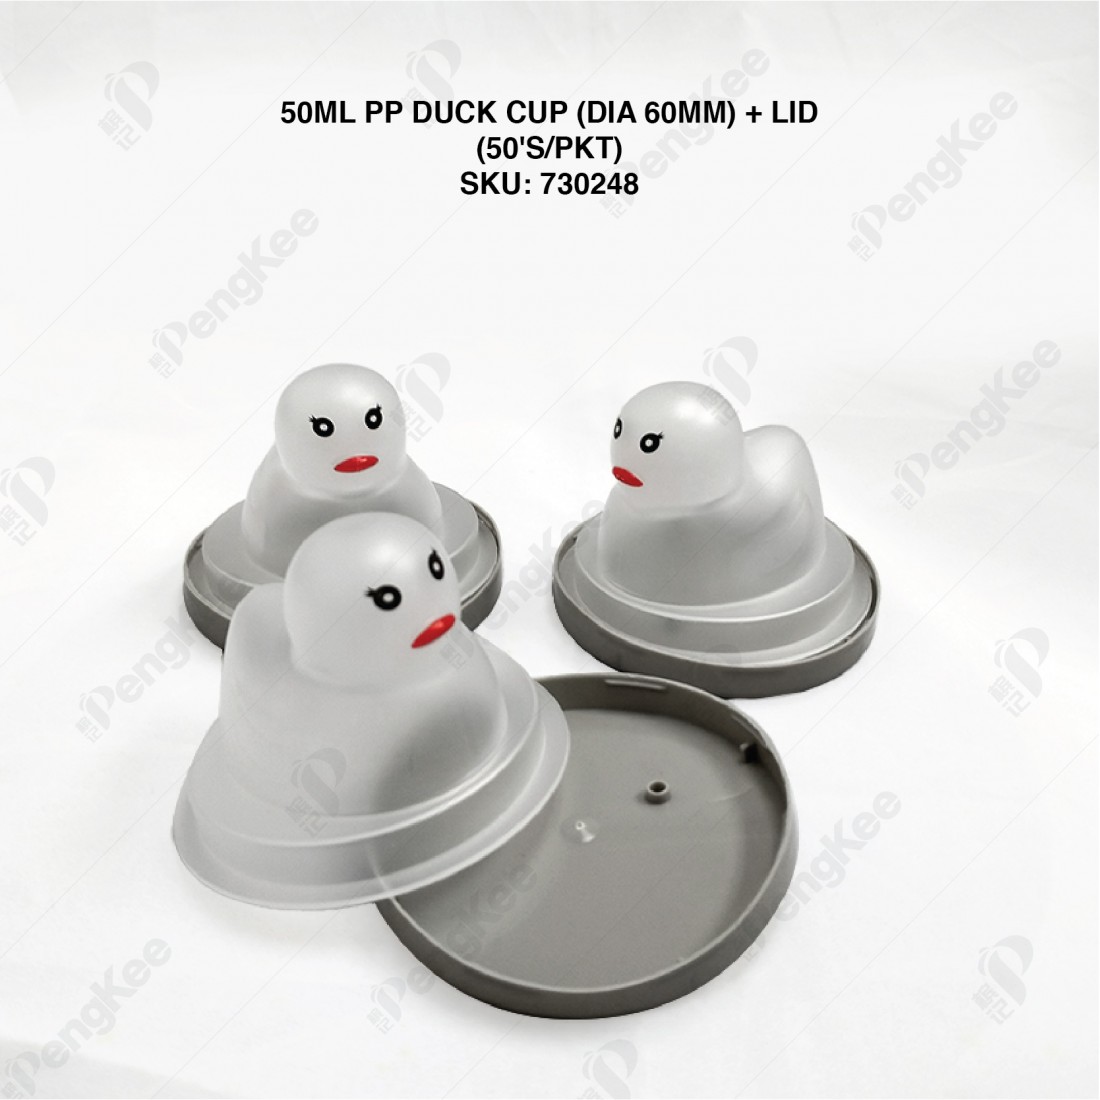 50ML PP DUCK CUP (DIA 60MM) + LID (50'S/PKT)